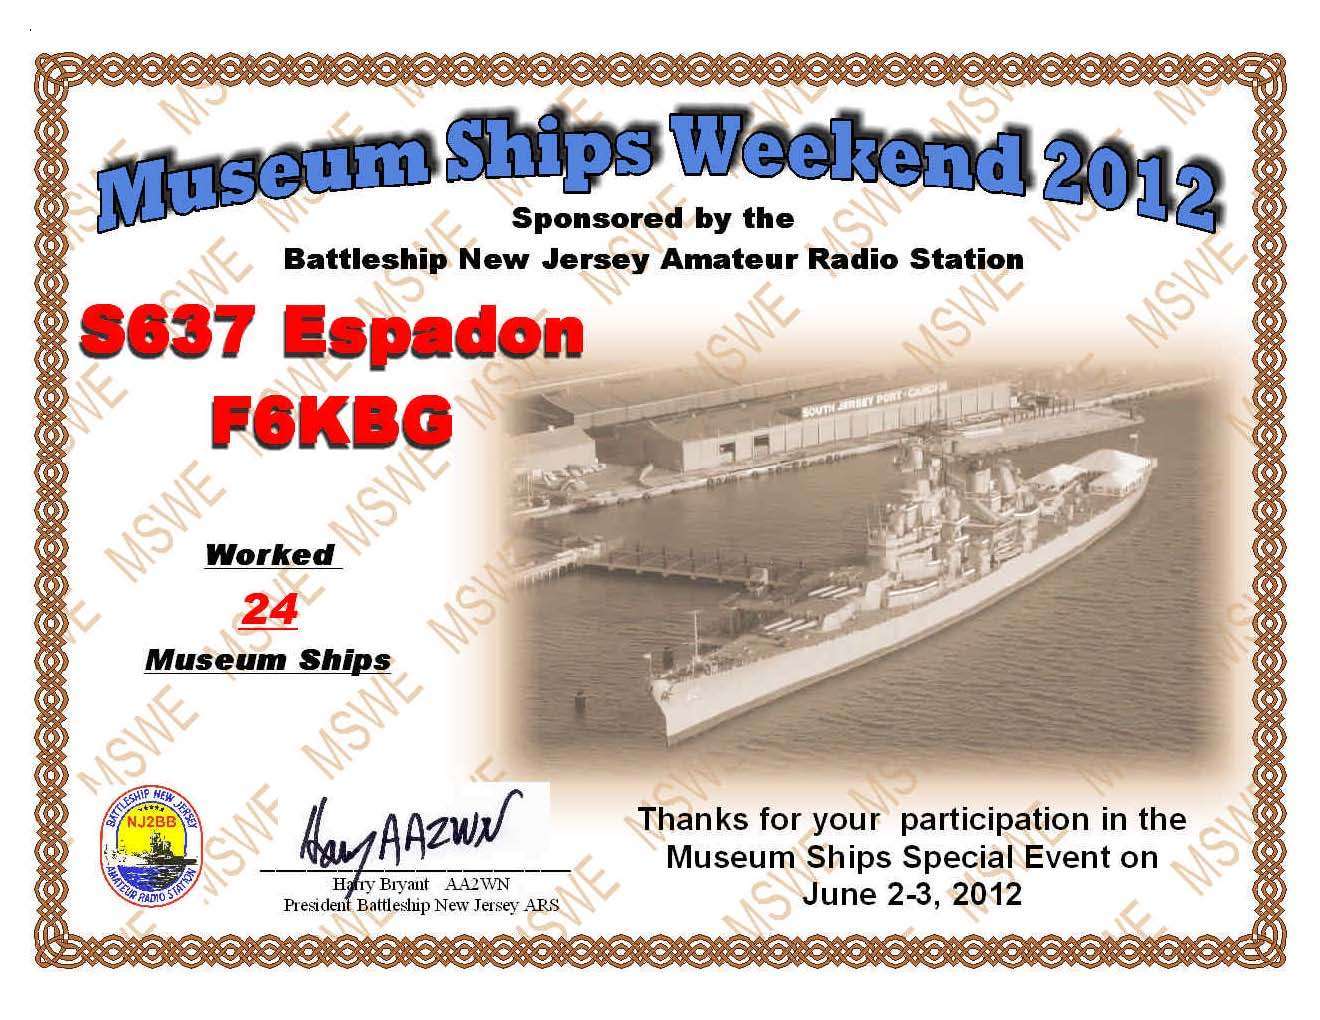 2012 F6KBG MSW espadon 24 ships